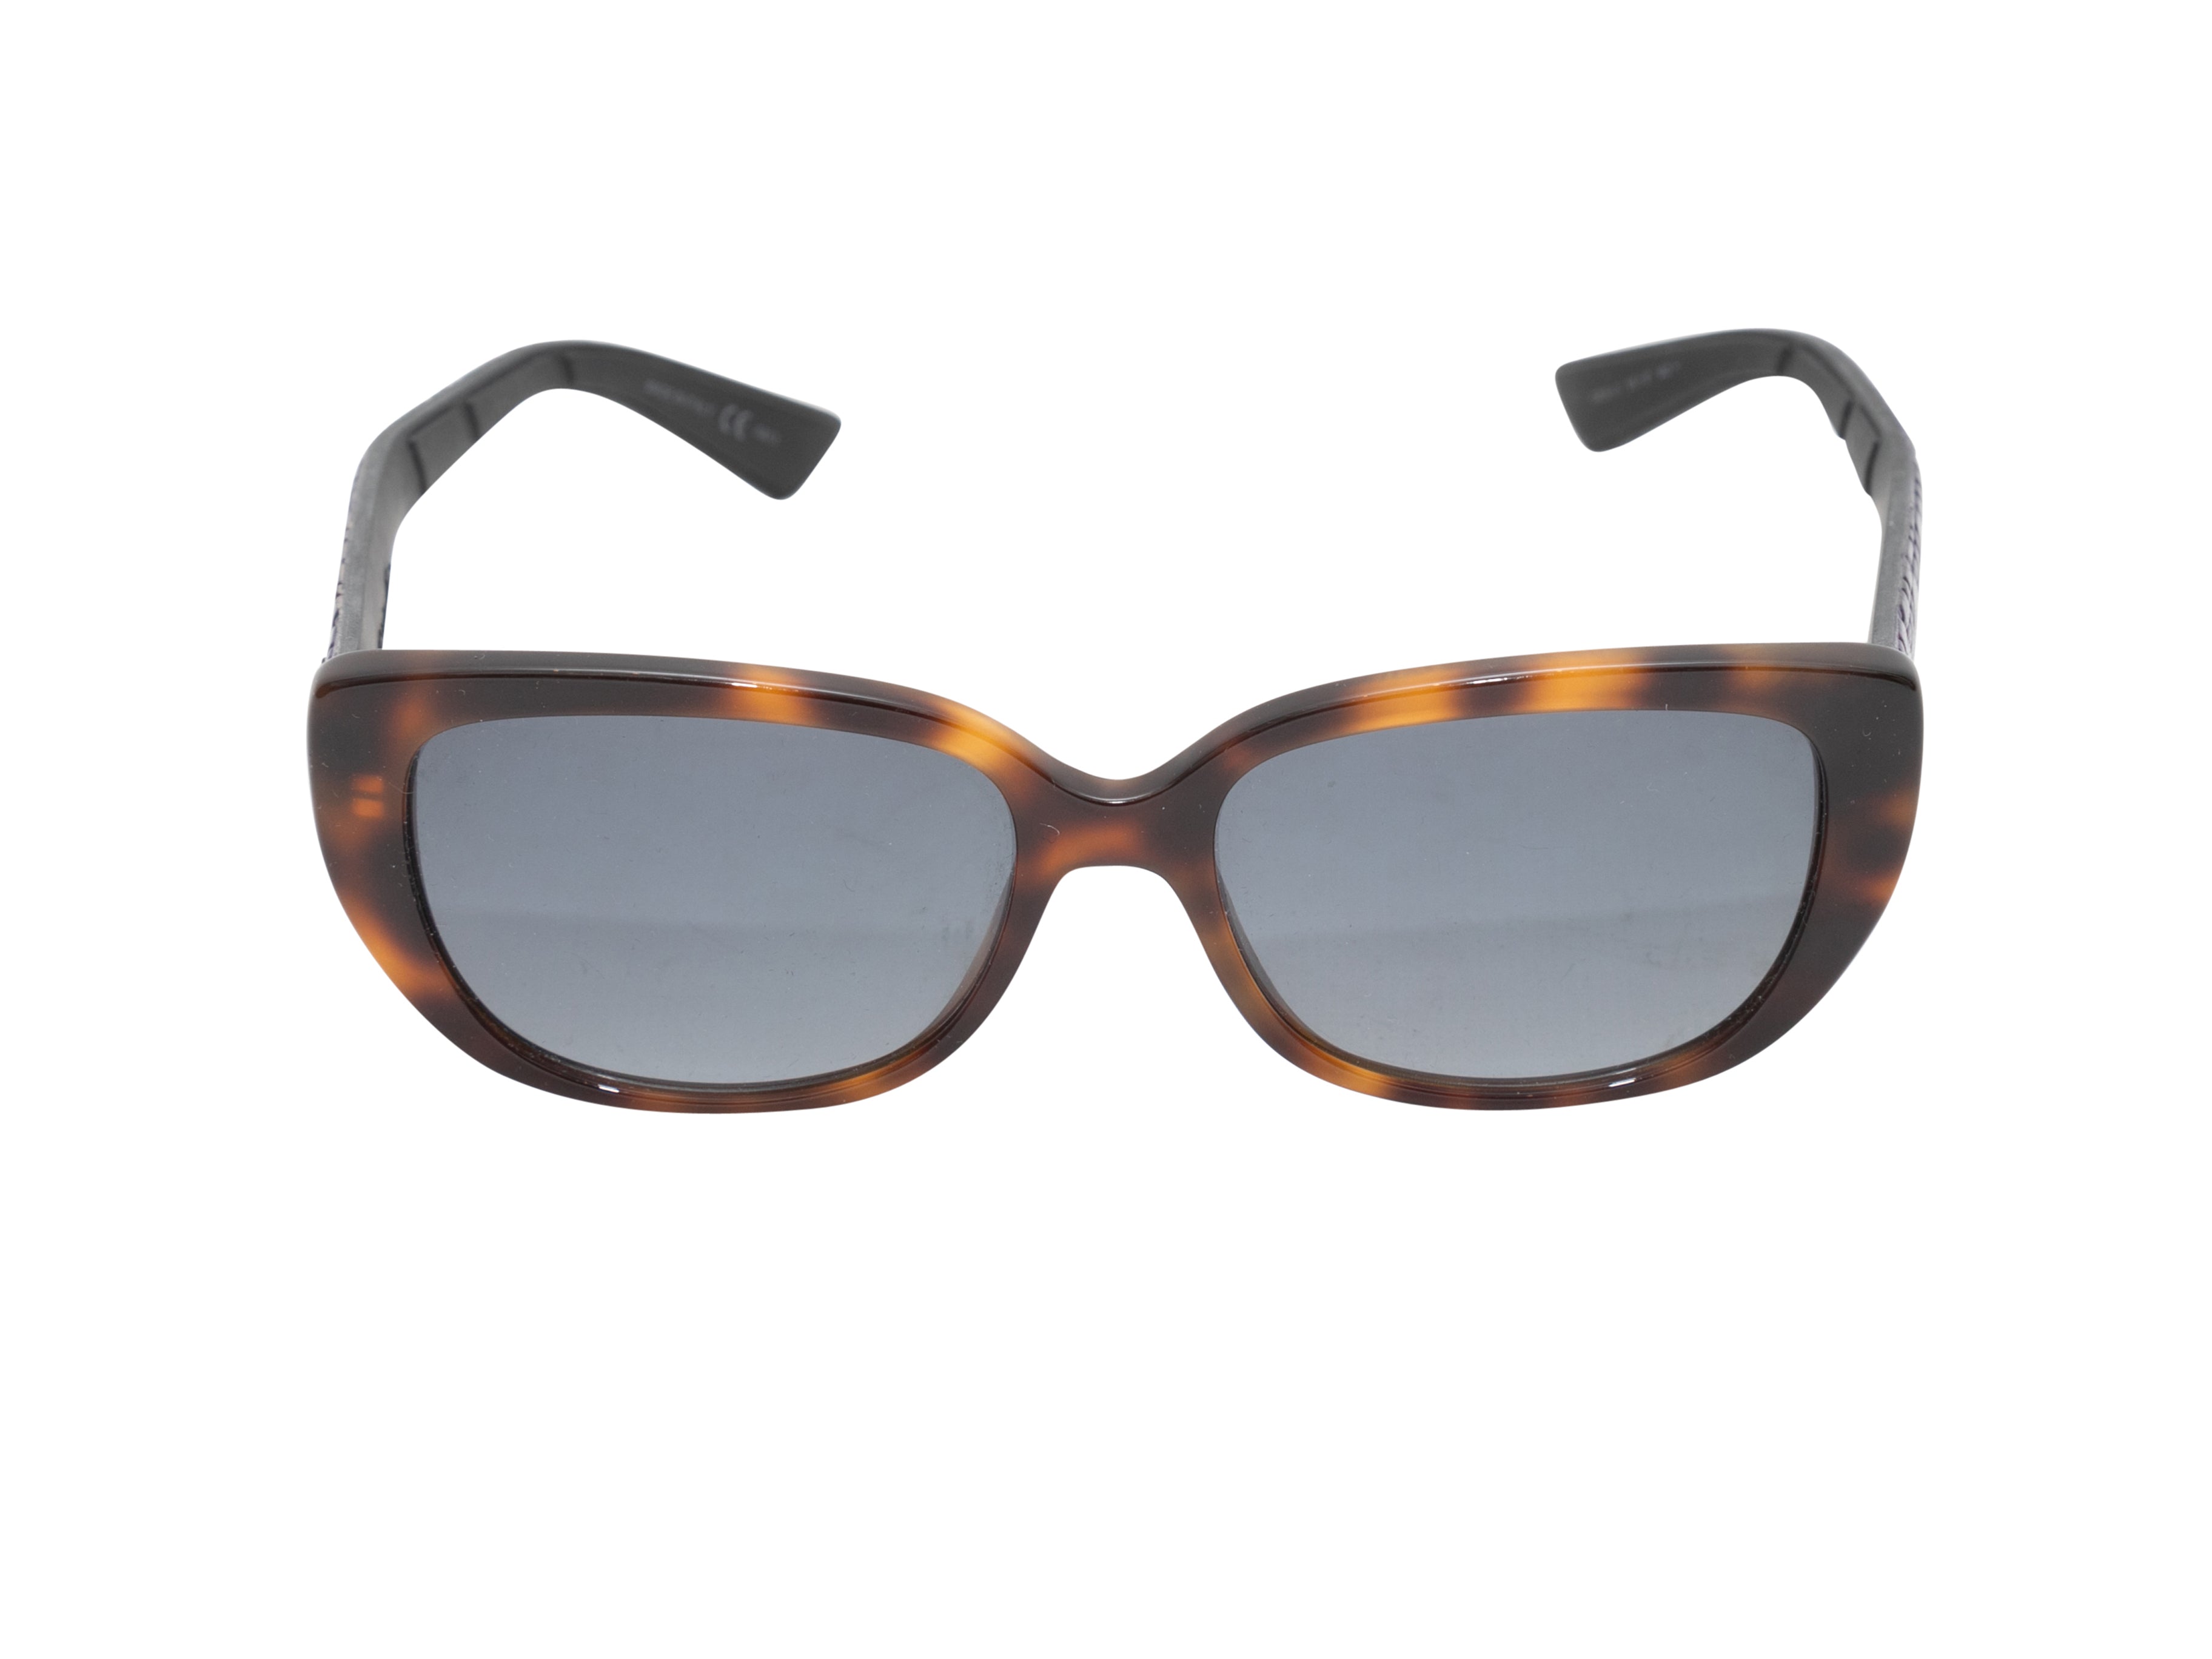 Louis Vuitton - Authenticated Sunglasses - Plastic Brown for Women, Good Condition